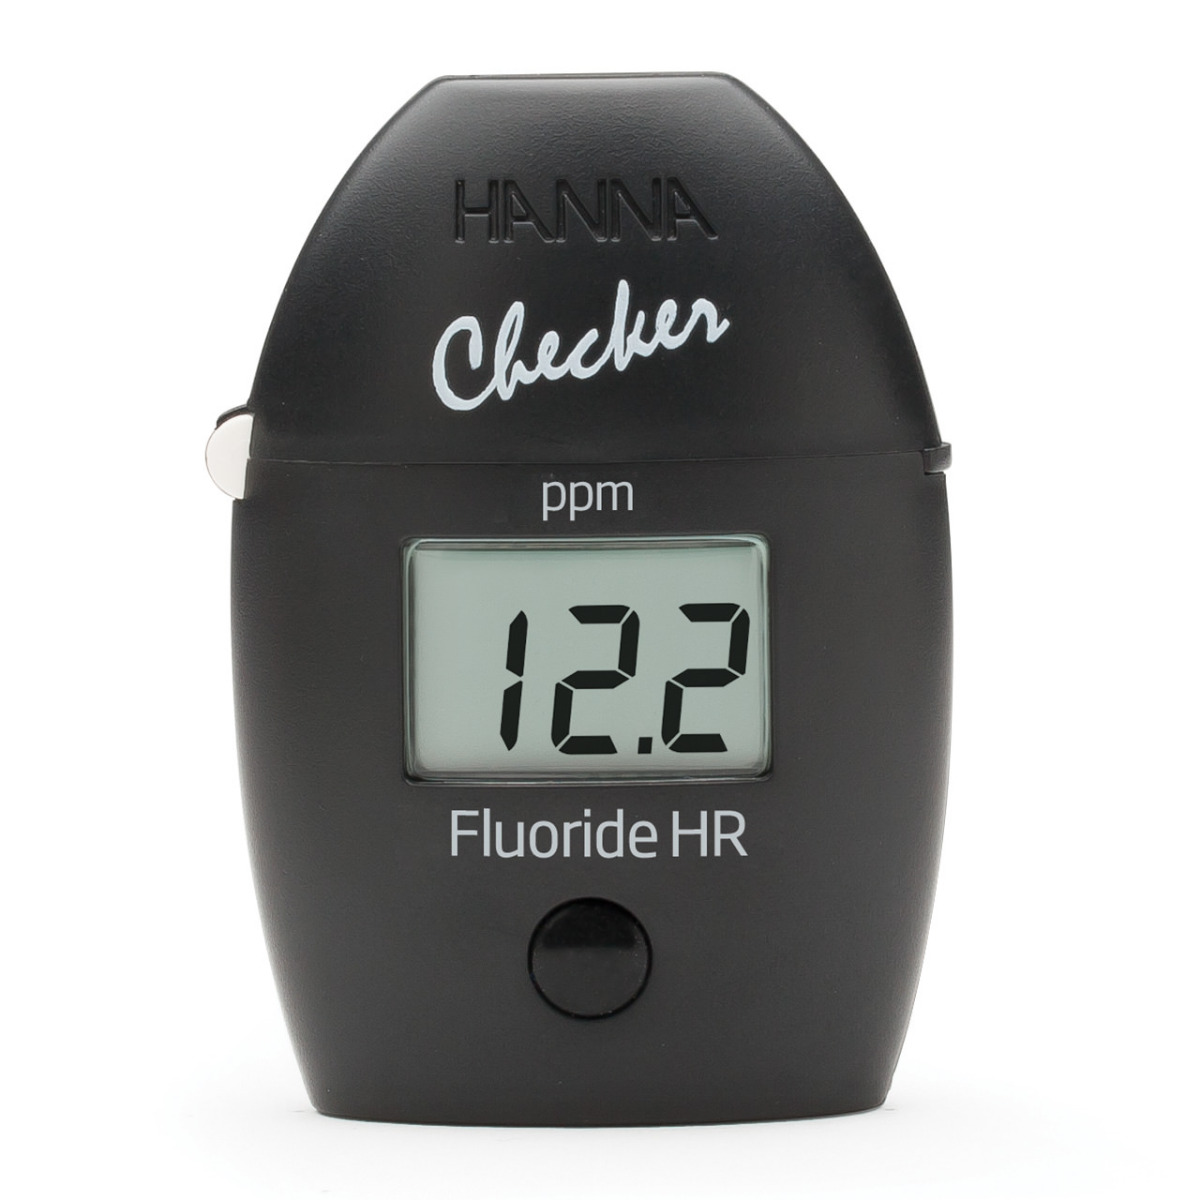 Fluoride High Range Checker® HC - HI739 